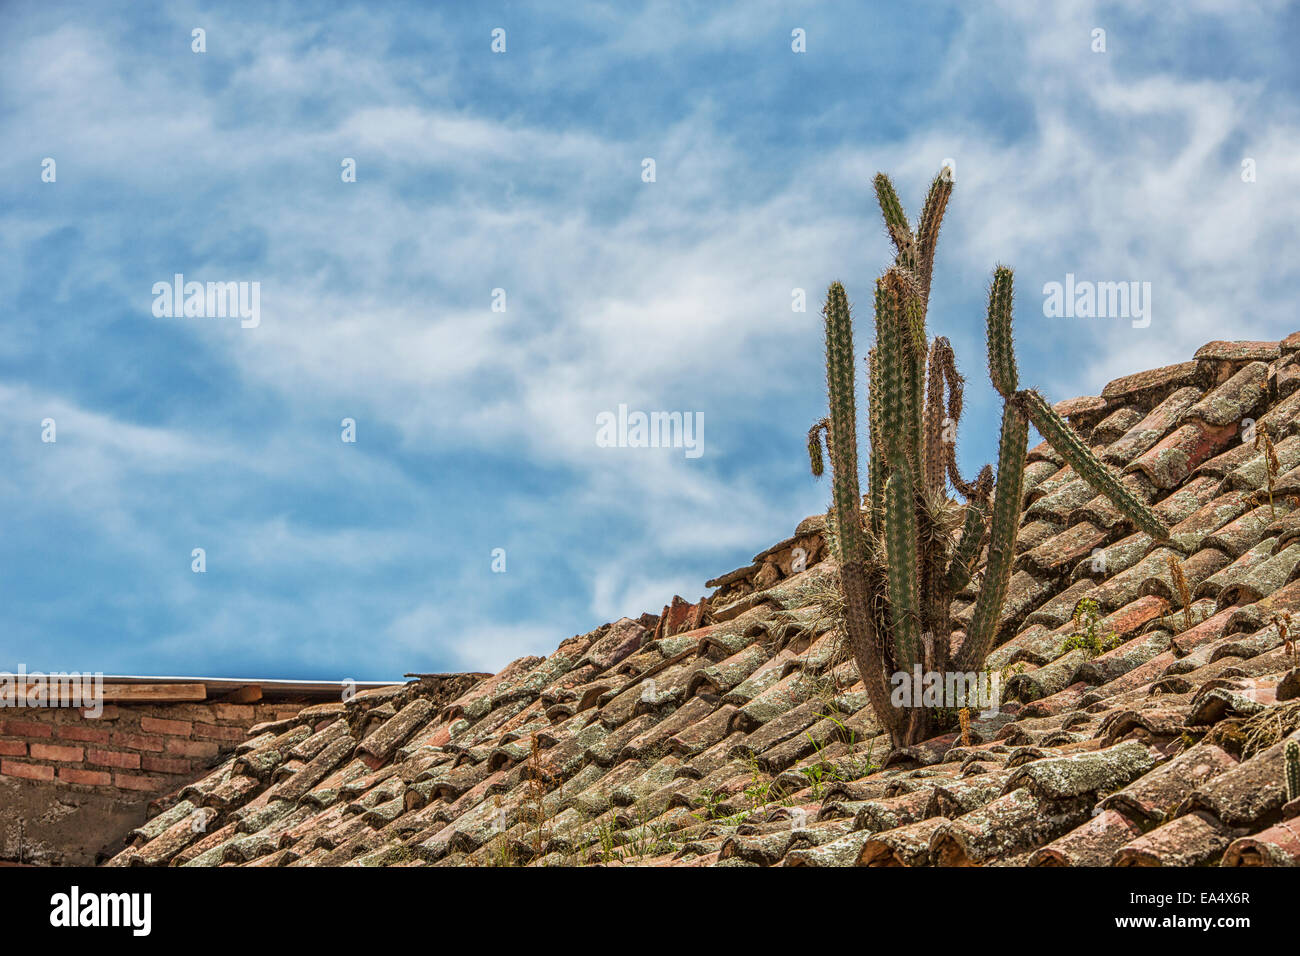 A cactus grows on a tile roof on a house; Tarata, Bolivia Stock Photo